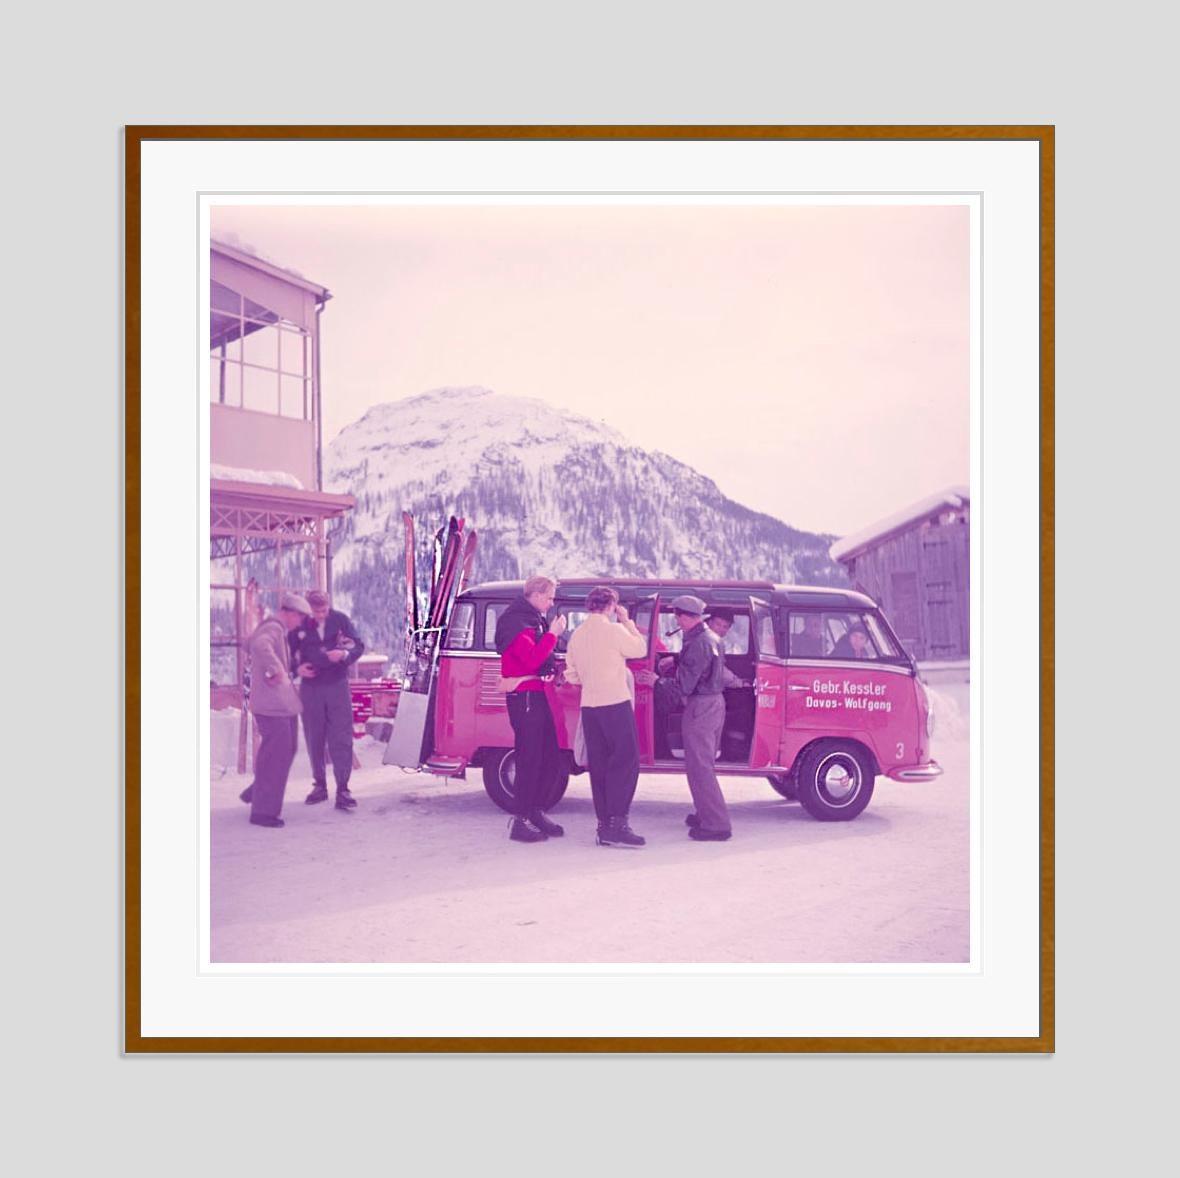 Ski Bus 

1954

Skiers board a VW camper van, Klosters, Switzerland, 1954

by Toni Frissell

20 x 20